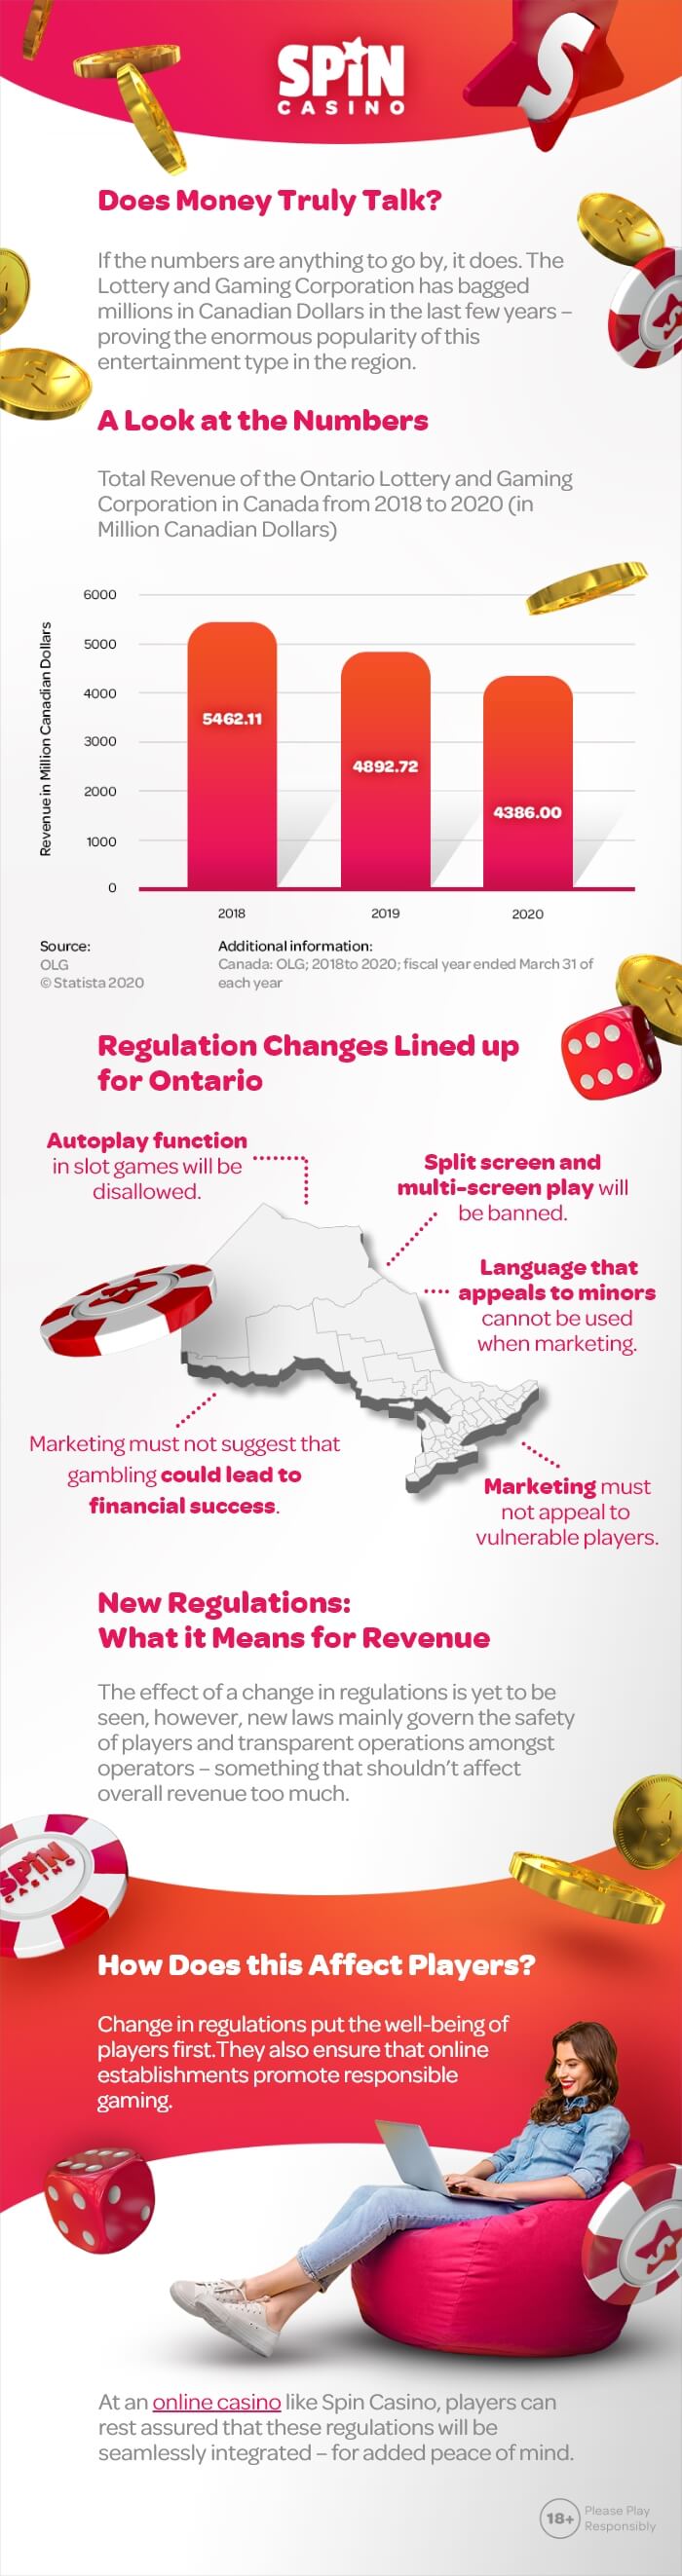 Ontario regulations and revenue